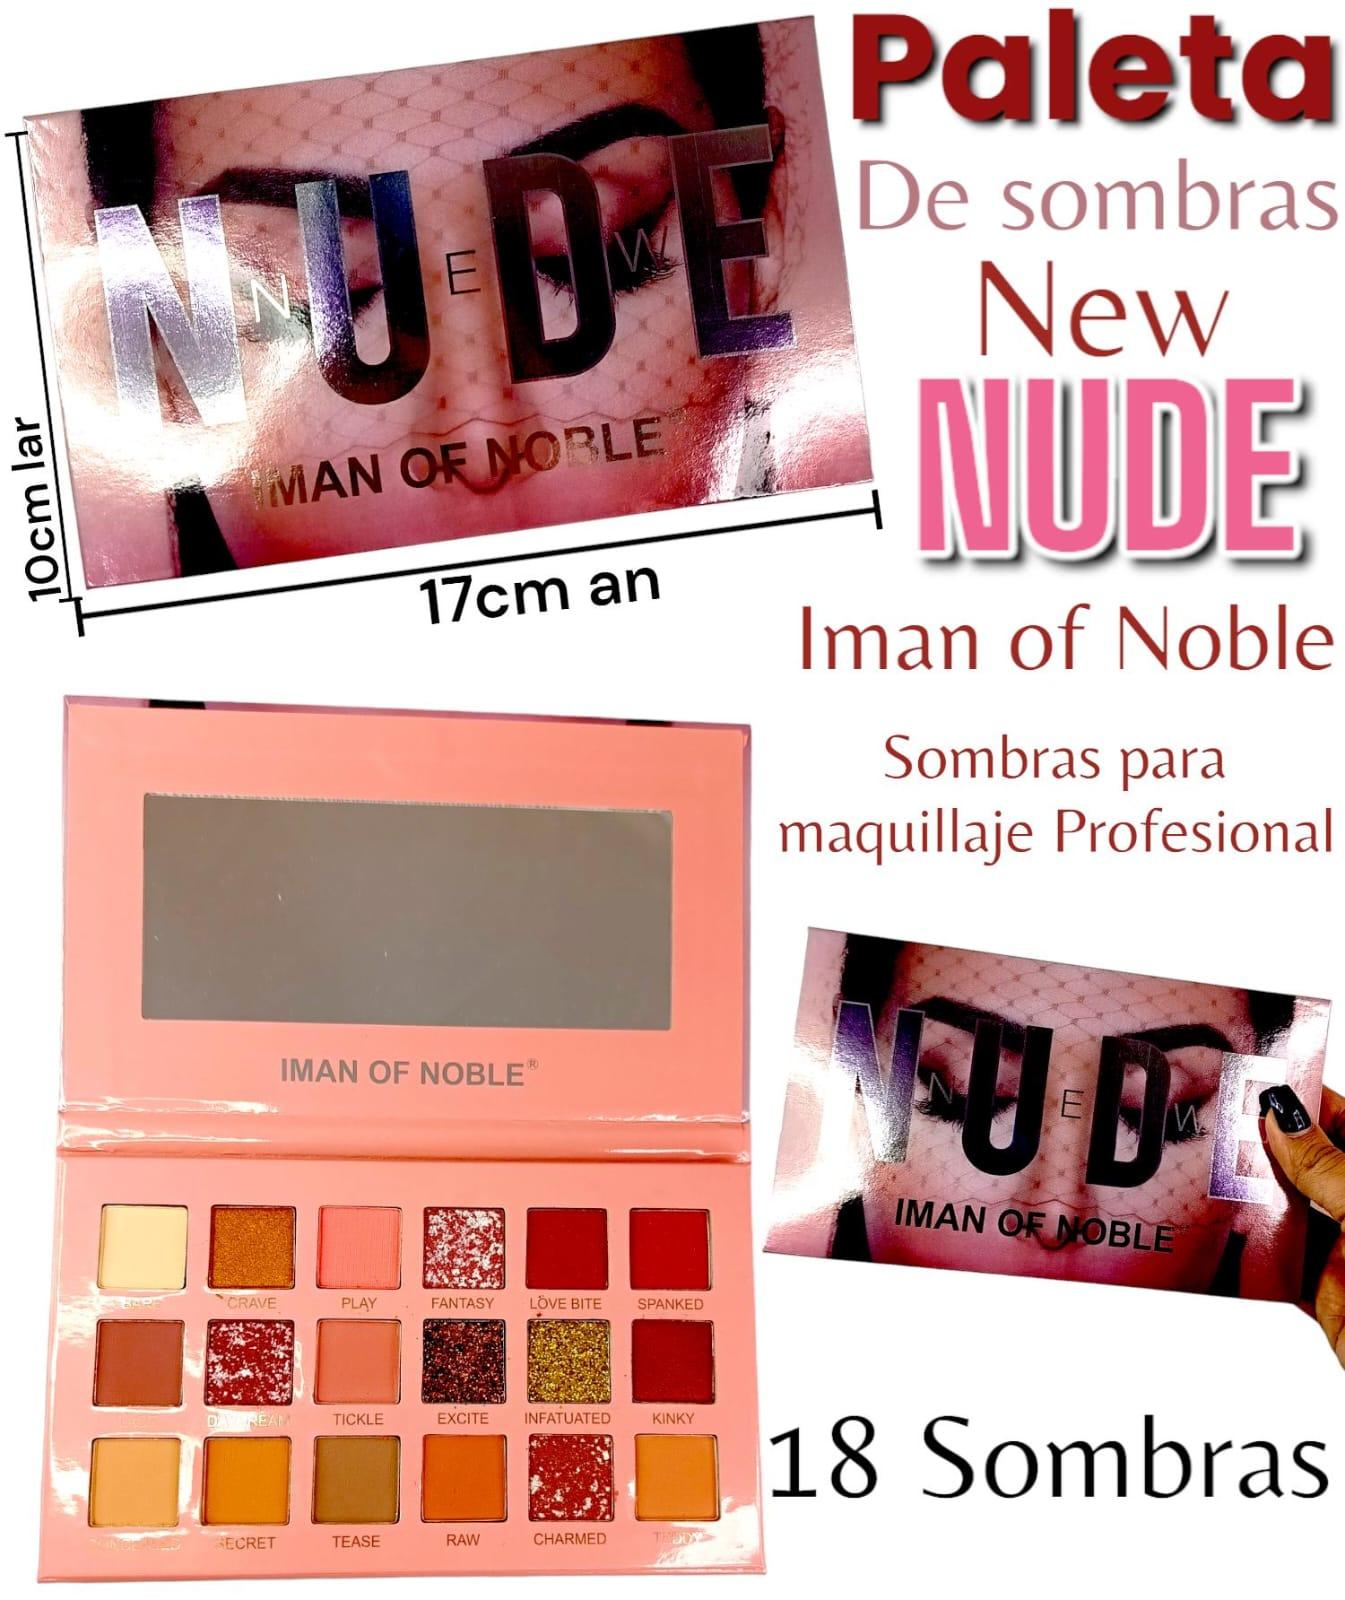 Paleta de Sombras Nude Iman Of Noble 10cm